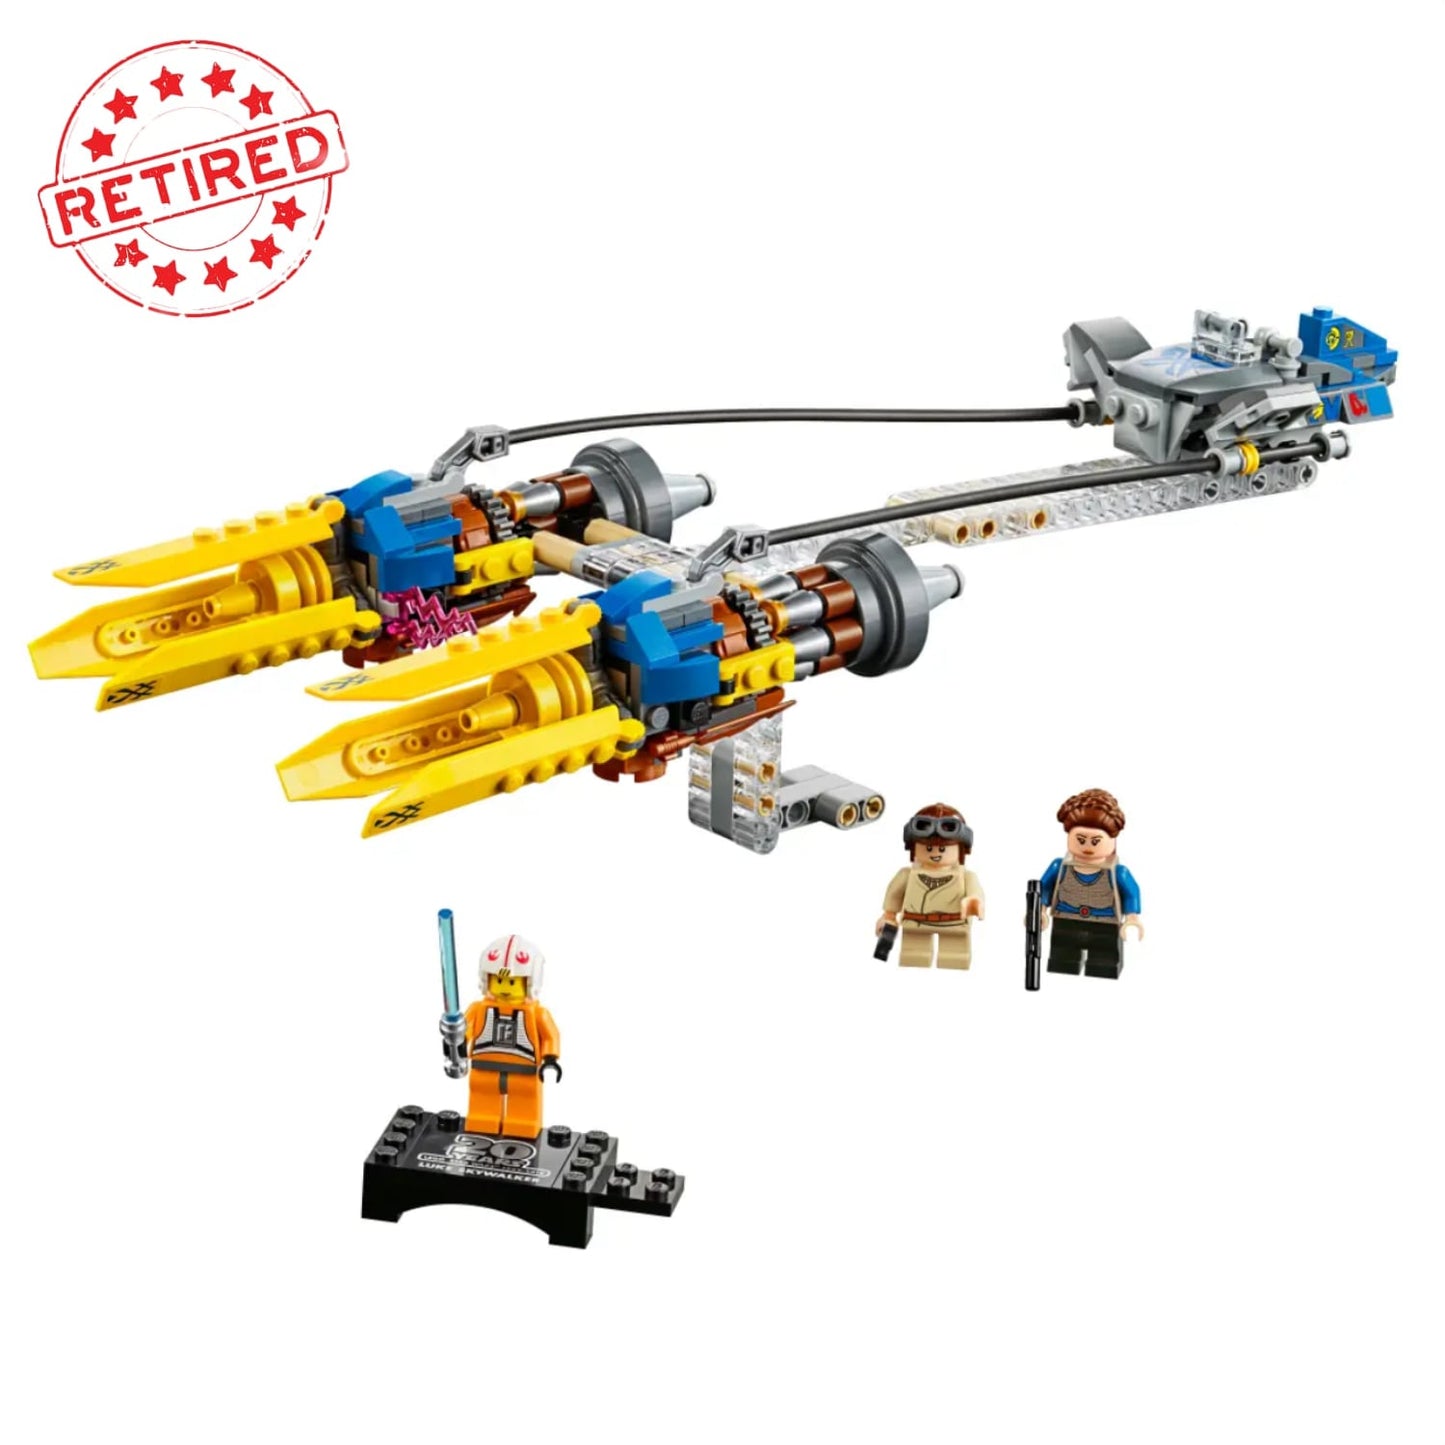 Lego 75258 Star Wars Anakin's Podracer – 20th Anniversary Edition